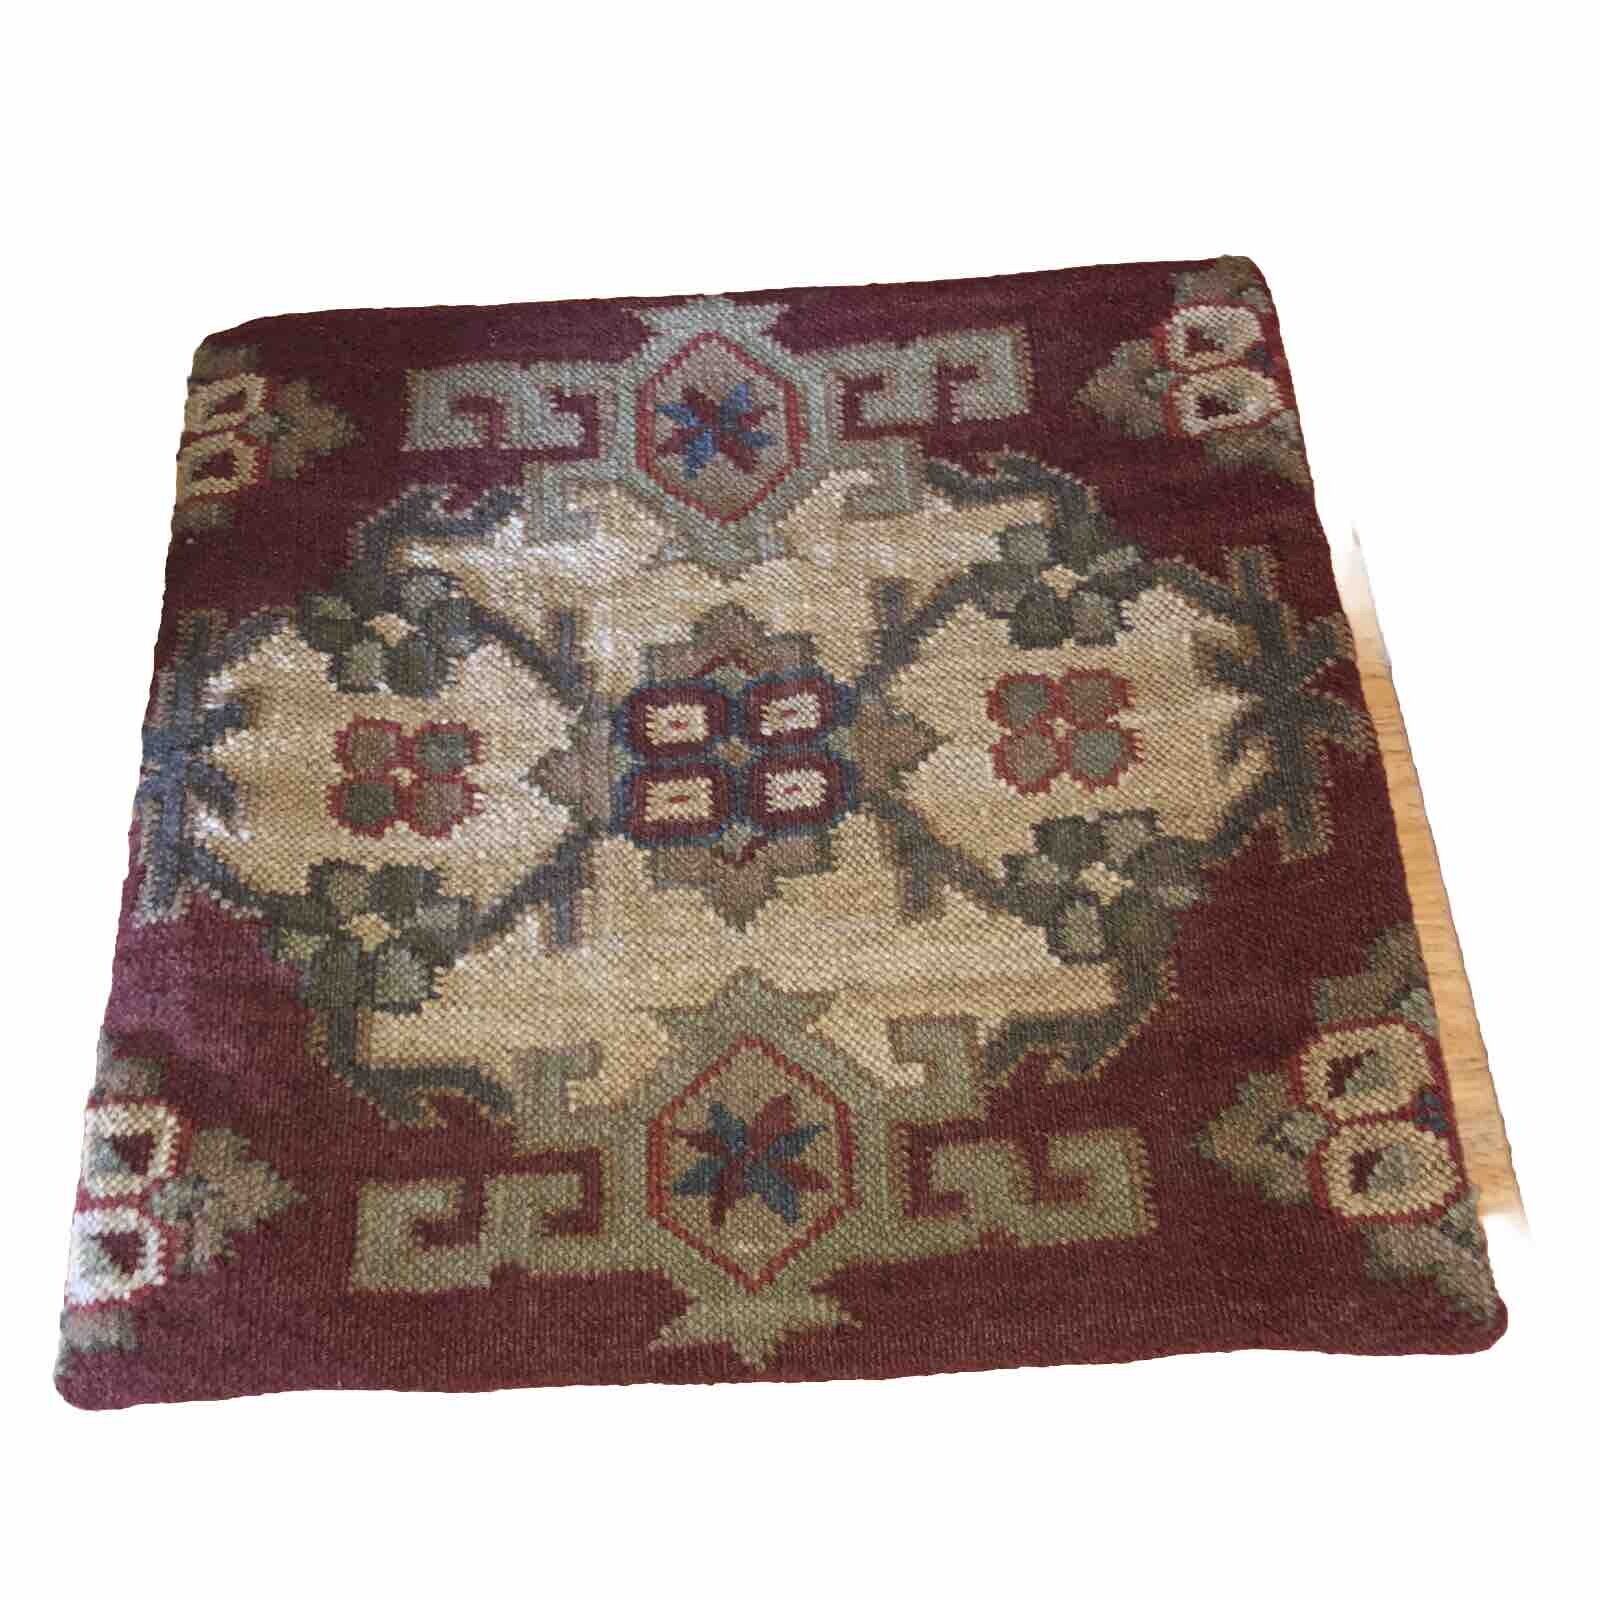 VTG Pottery Barn Kilim Wool/Cotton Multicolor 18” Square Pillow Cover #3